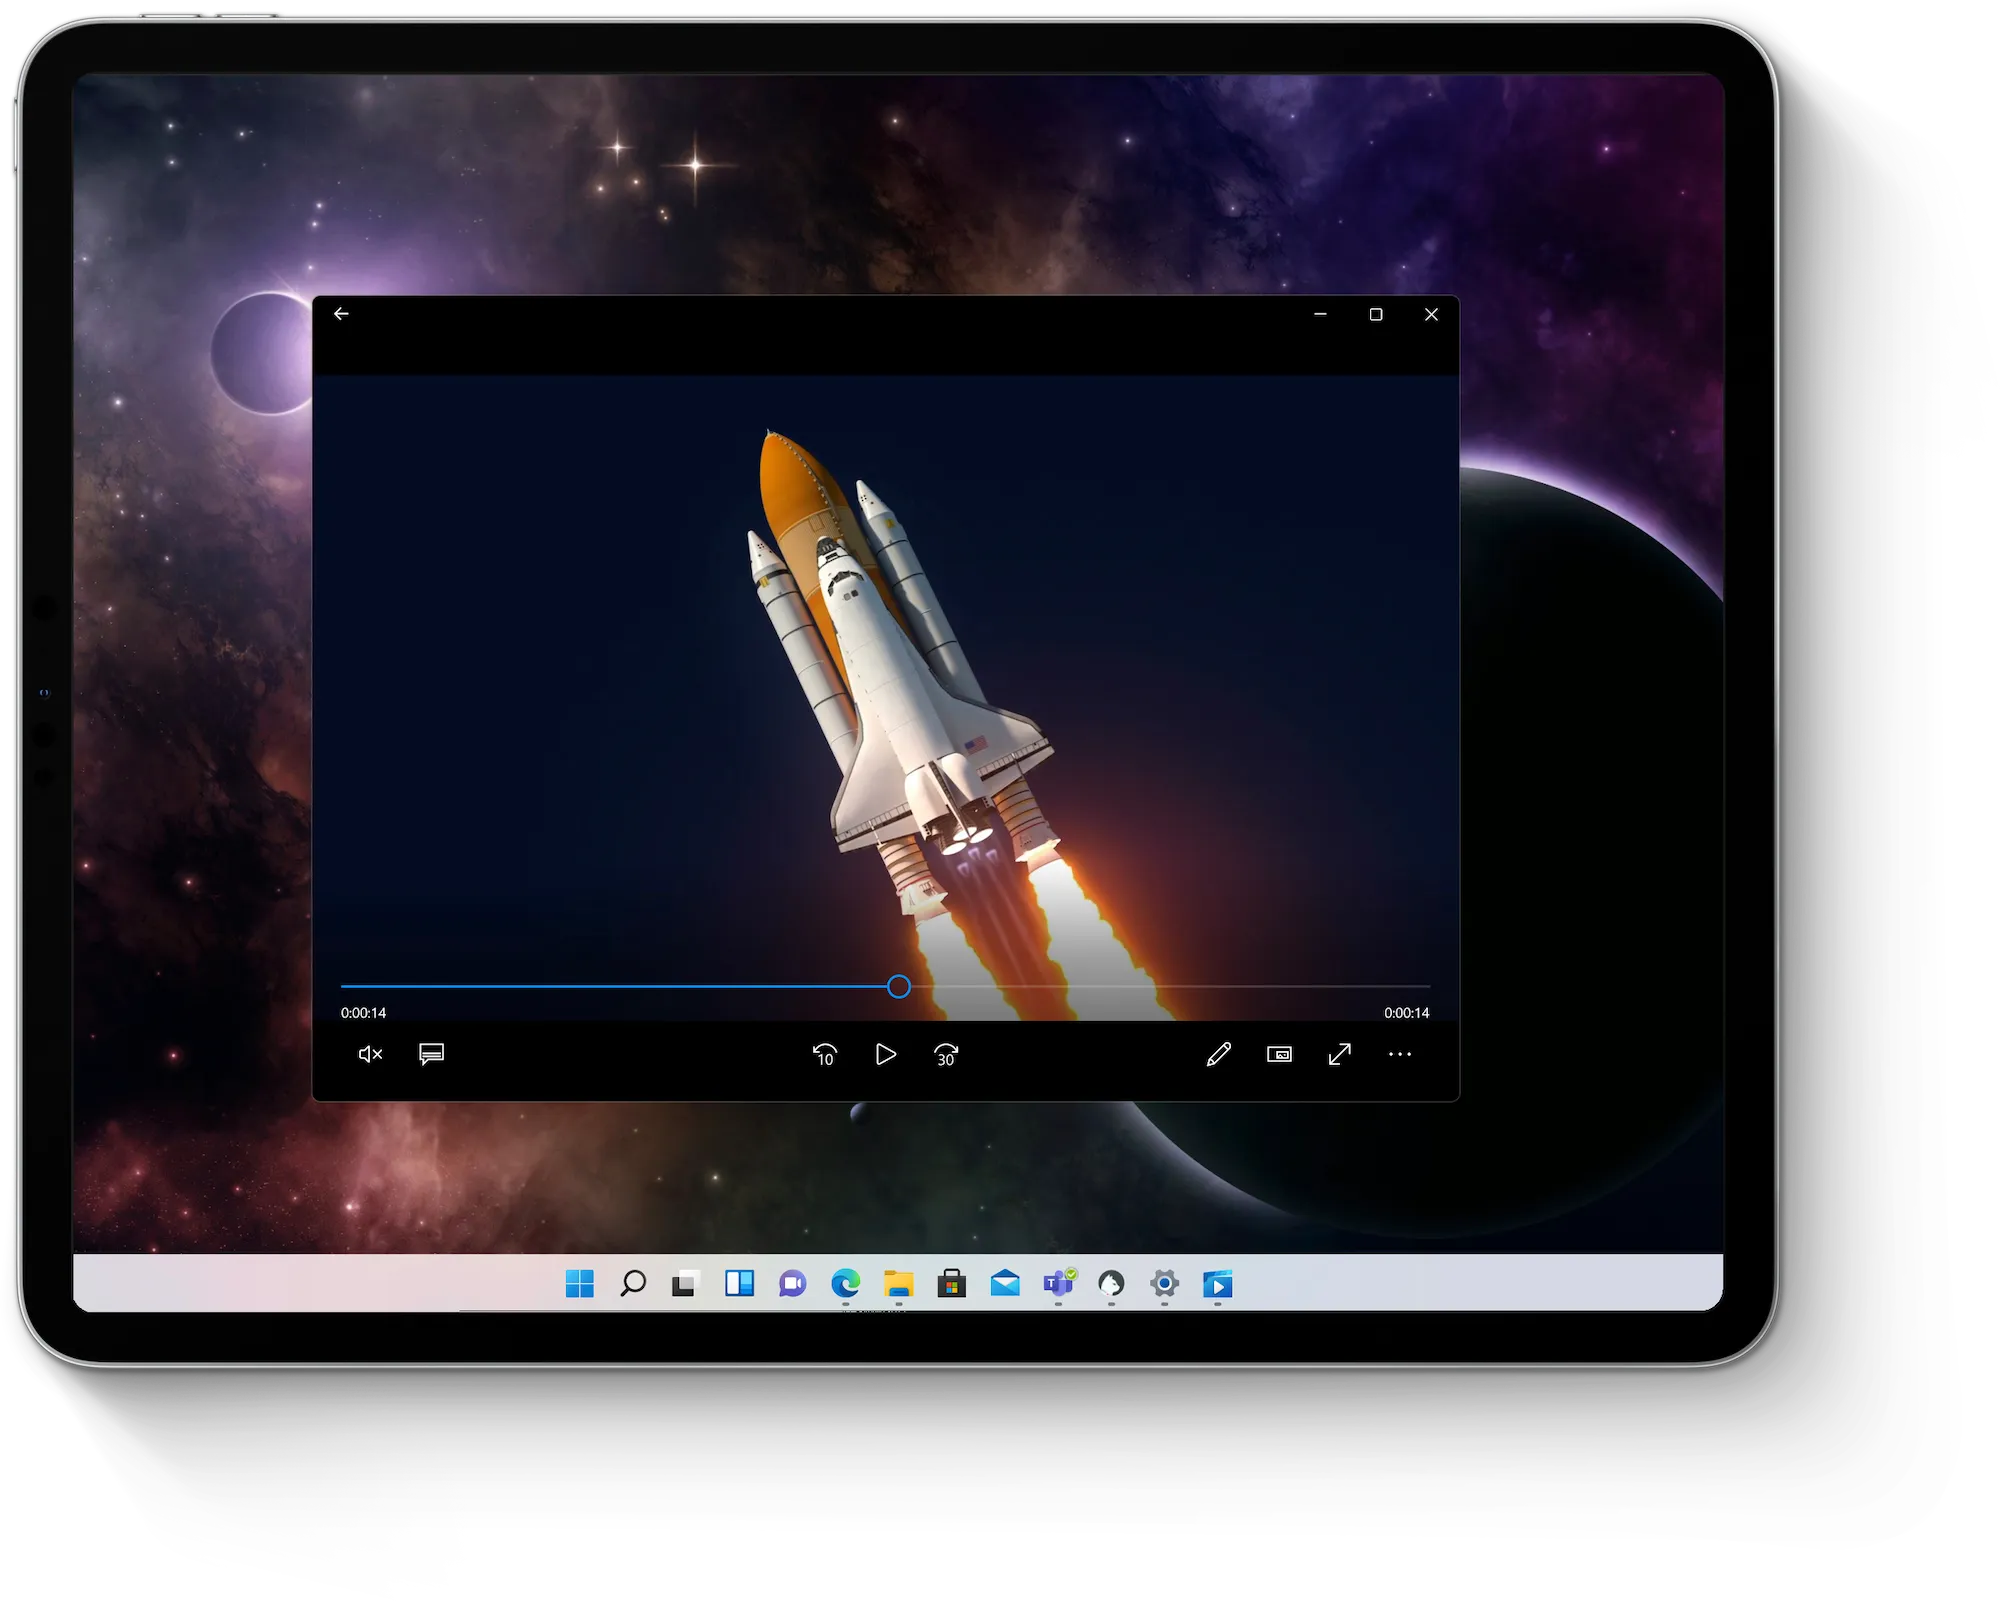 Luna Display | Turn your Mac or iPad into a second display